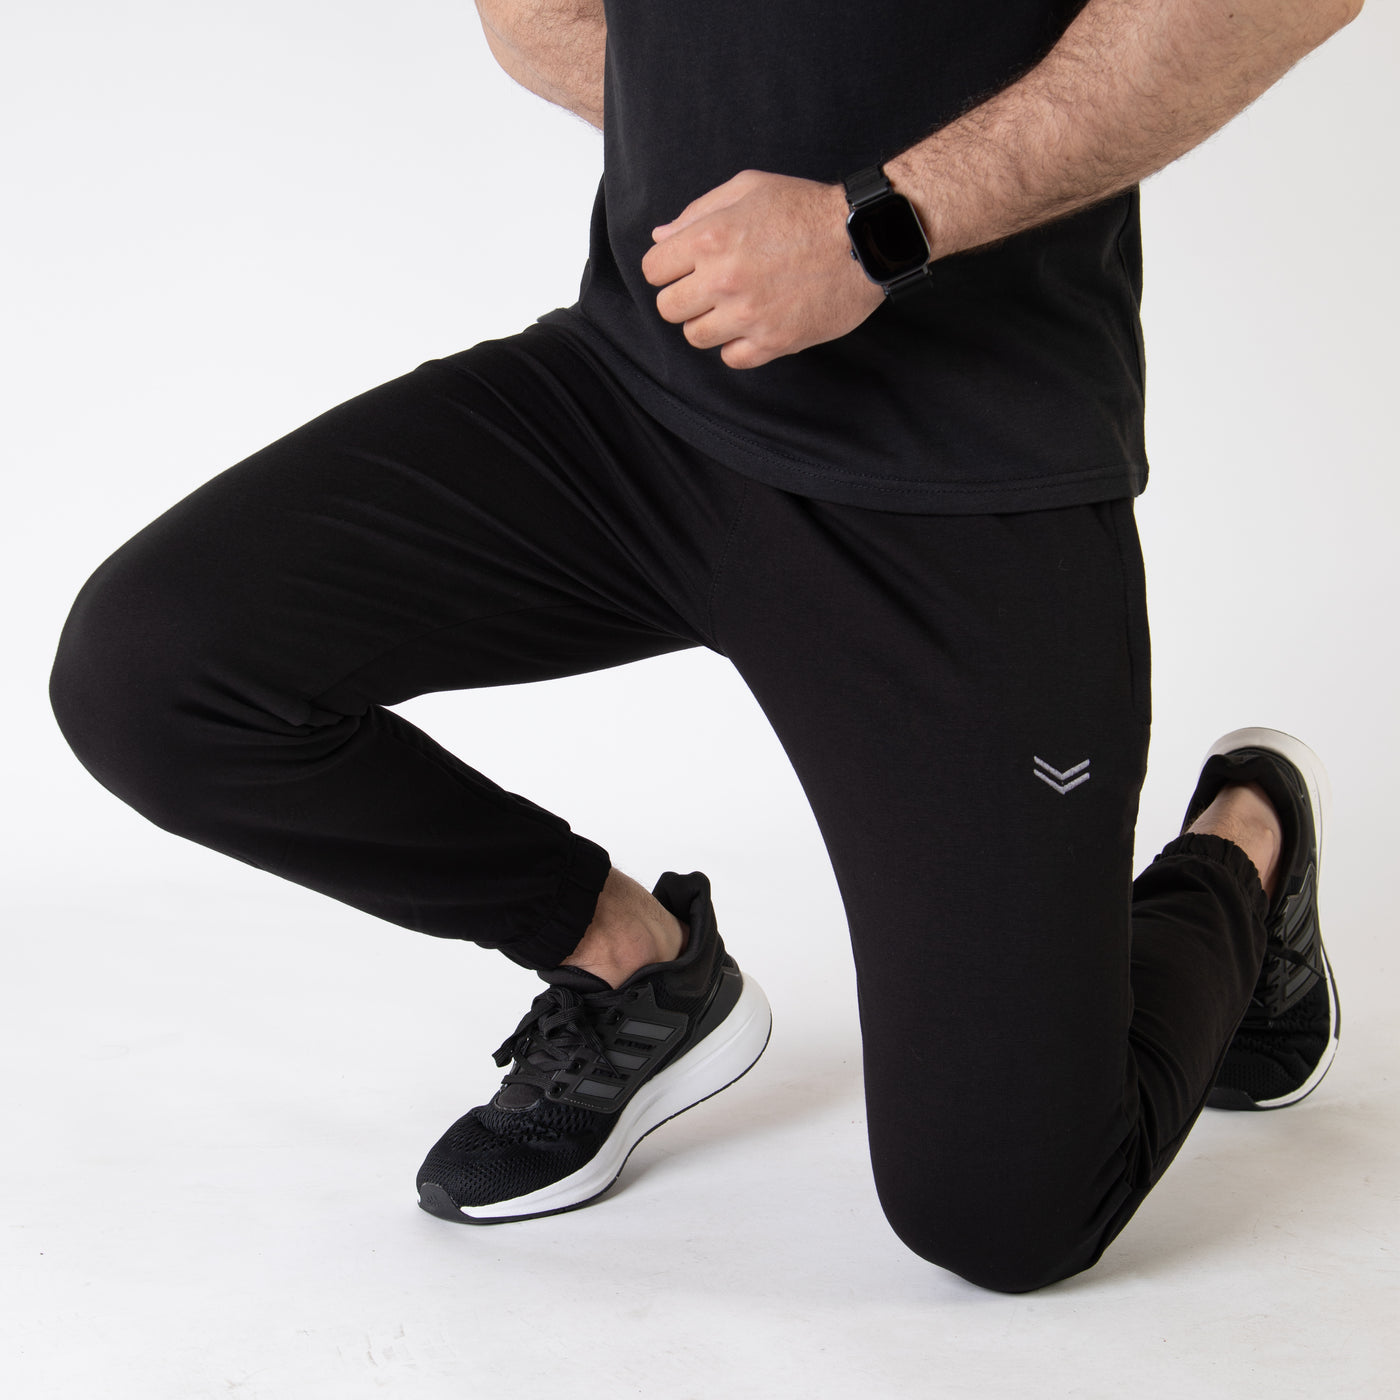 Premium Black Light-Weight 4-Way Stretch Lycra Terry Jogger Pants